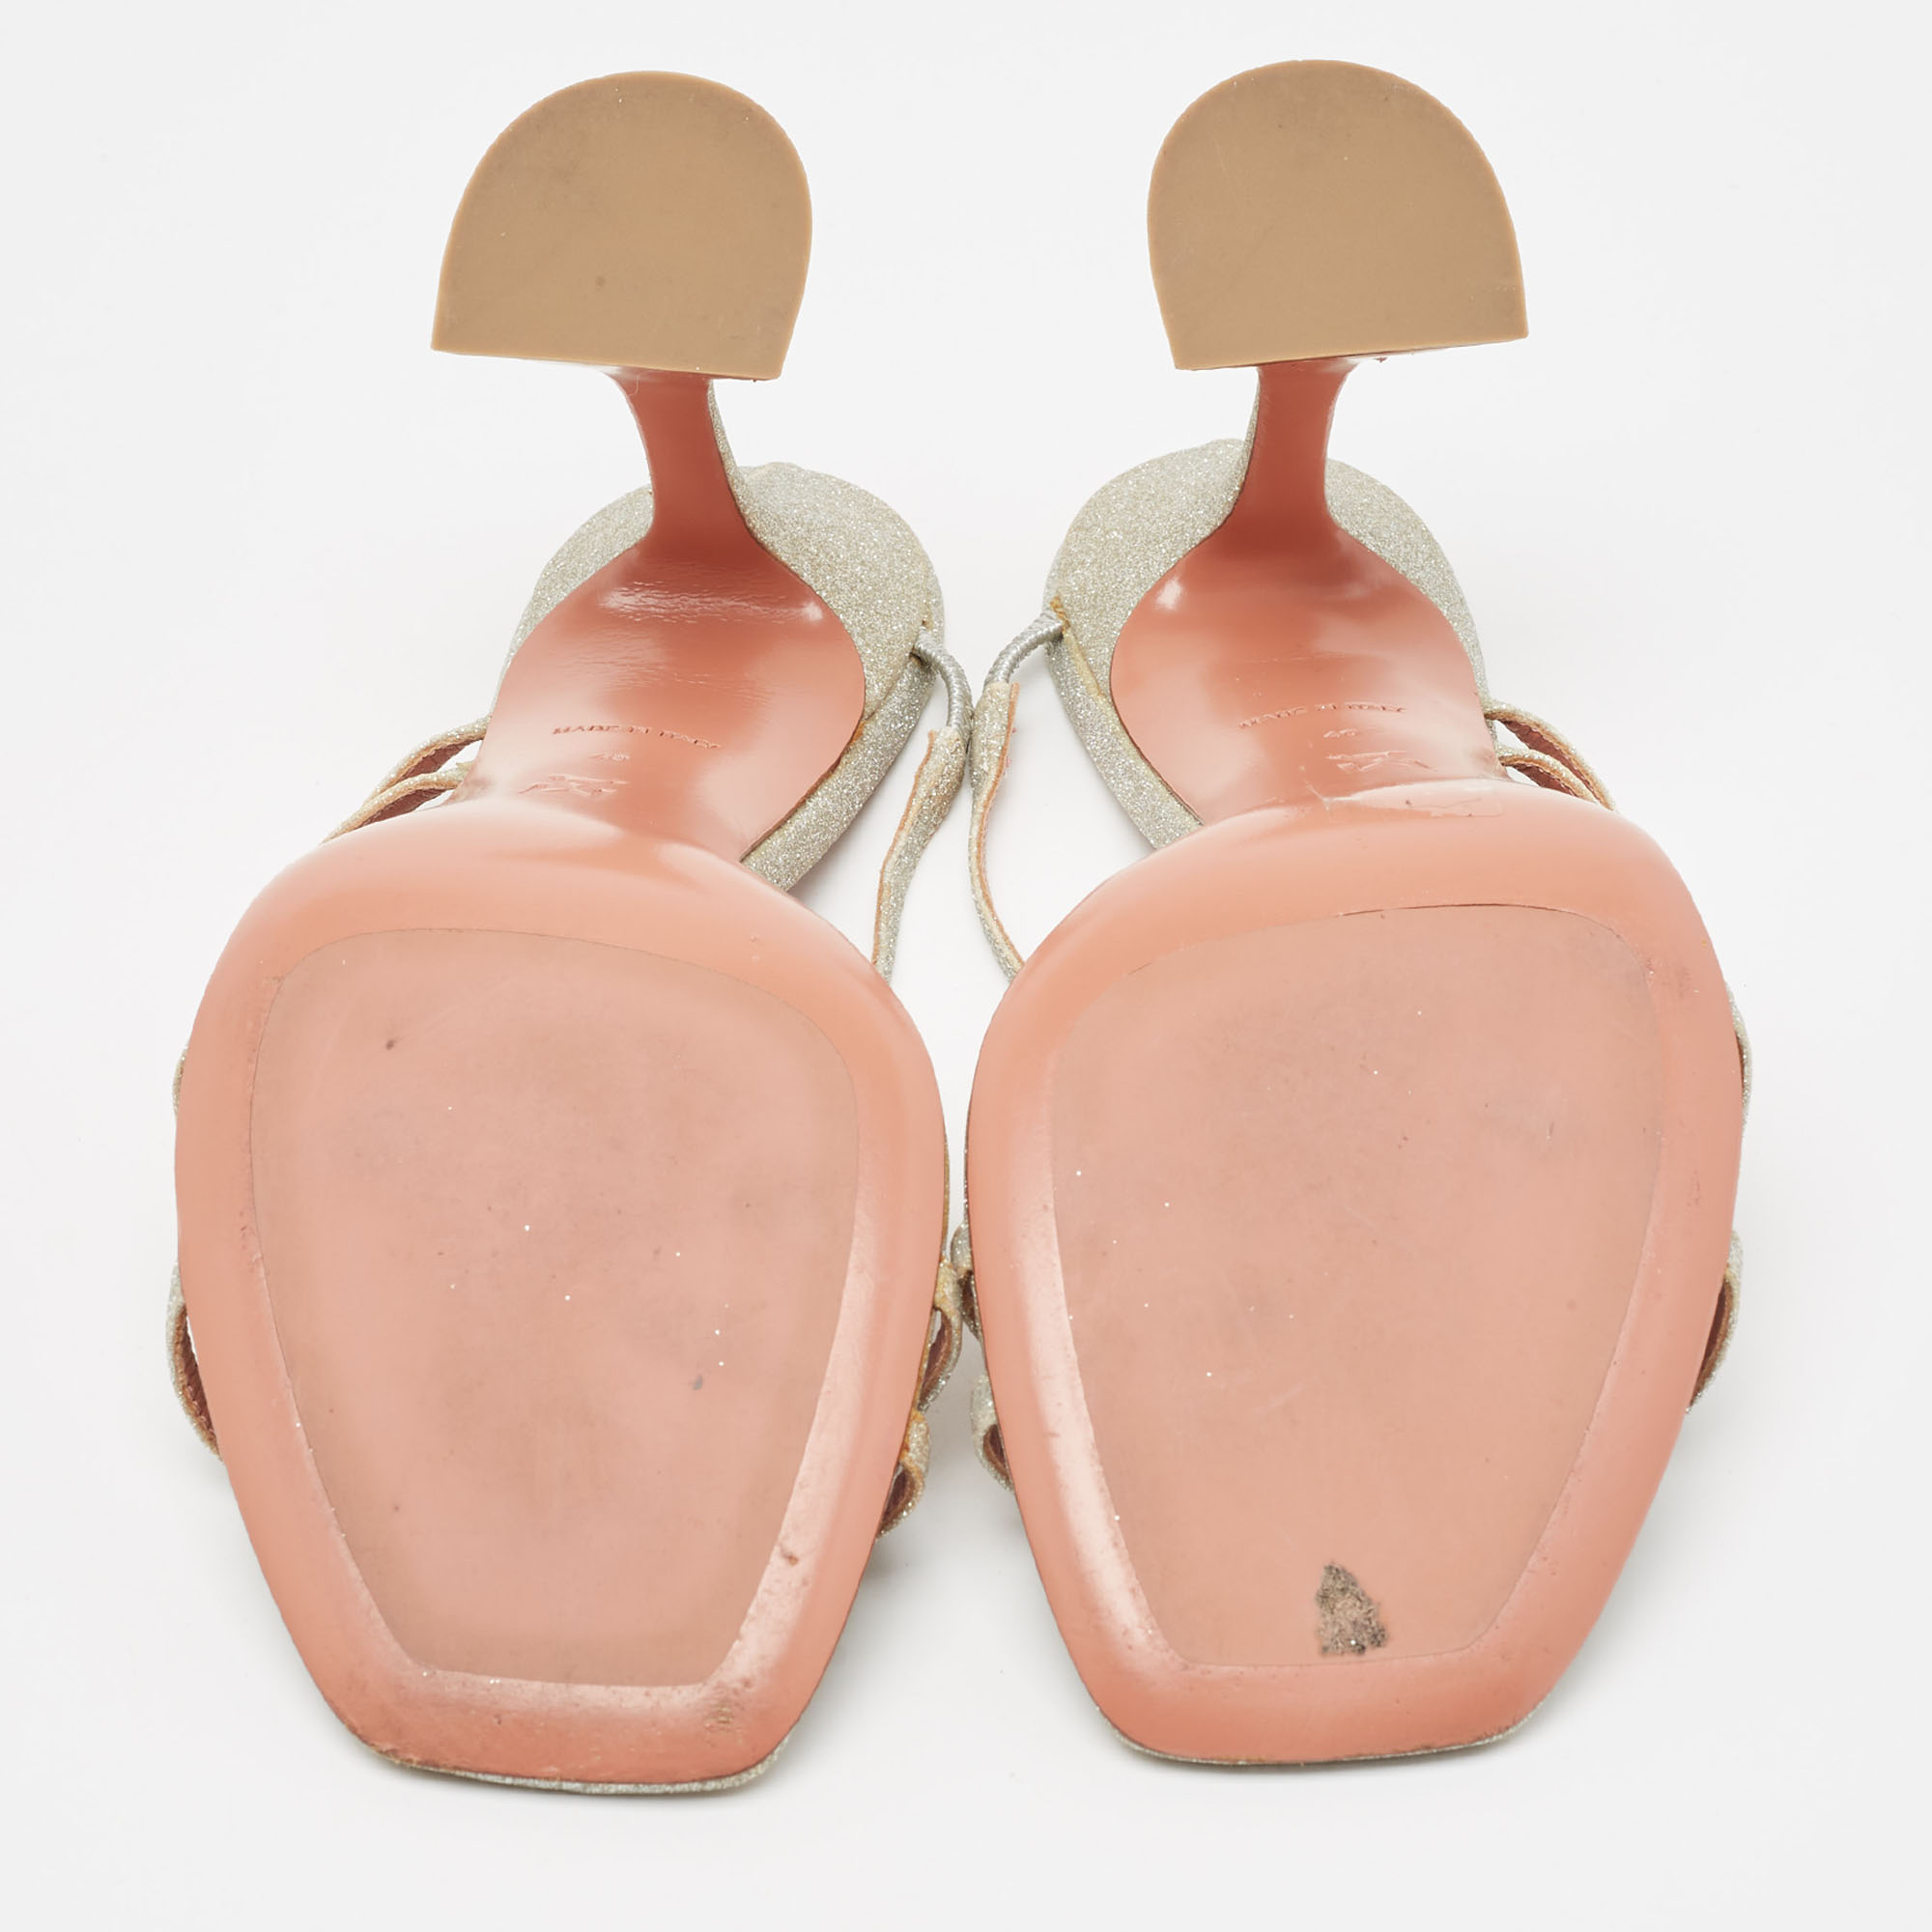 Amina Muaddi Silver Glitter Gilda Slide Sandals Size 40